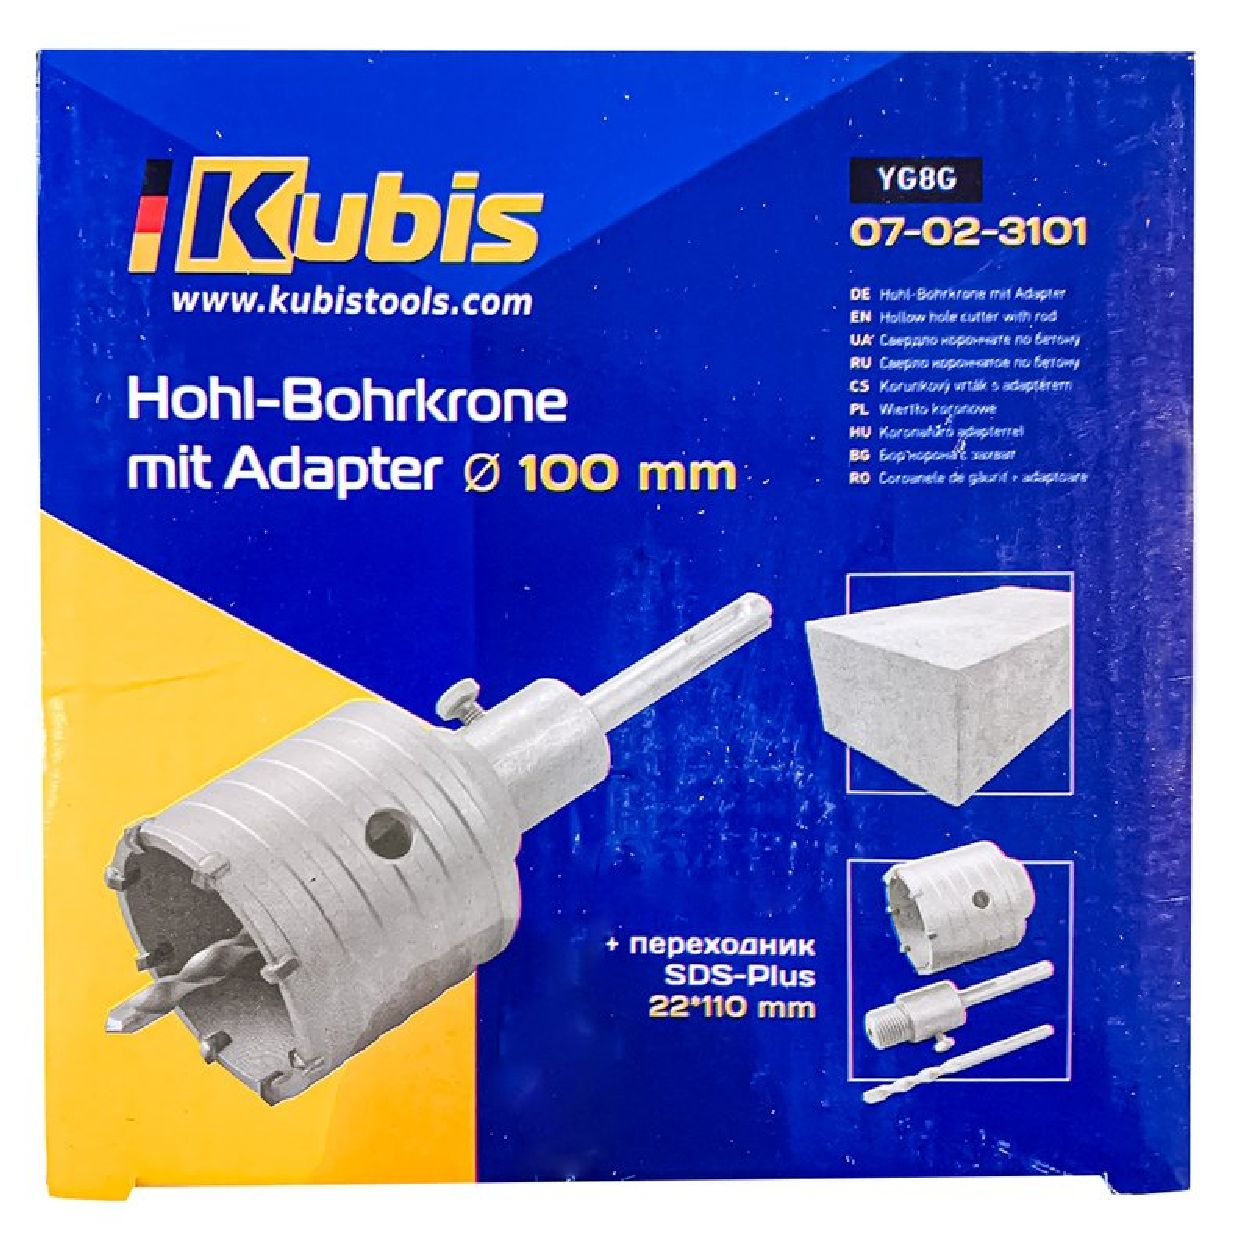 / KB07-02-3101 KUBIS Multifunktionswerkzeug, Transparent INBUSCO Hohl-Bohrkrone